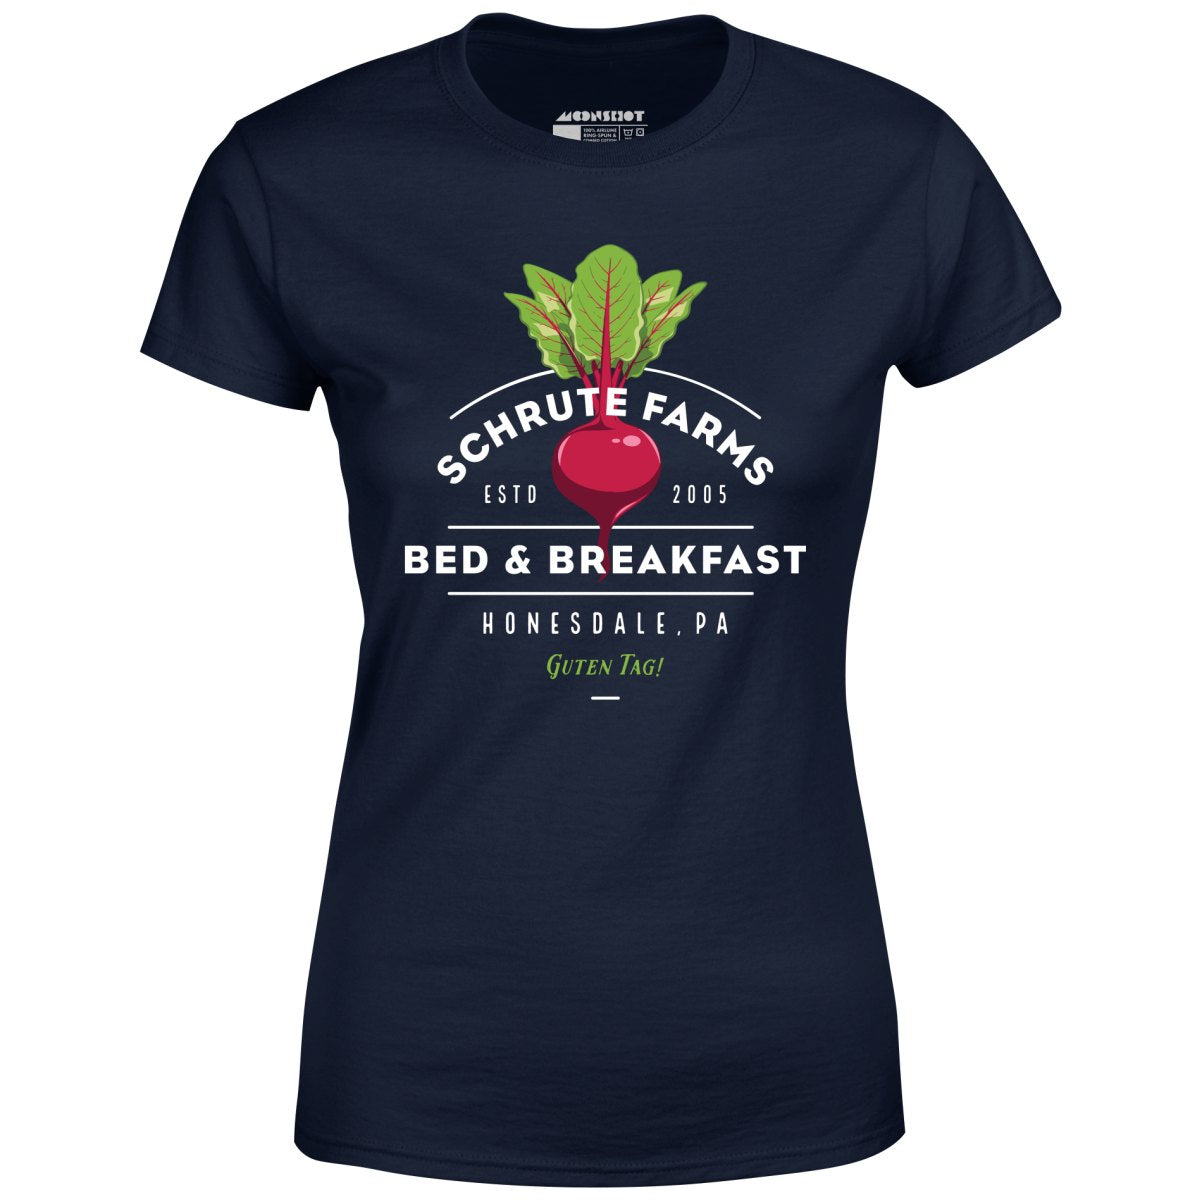 Schrute Farms Bed & Breakfast - Women's T-Shirt